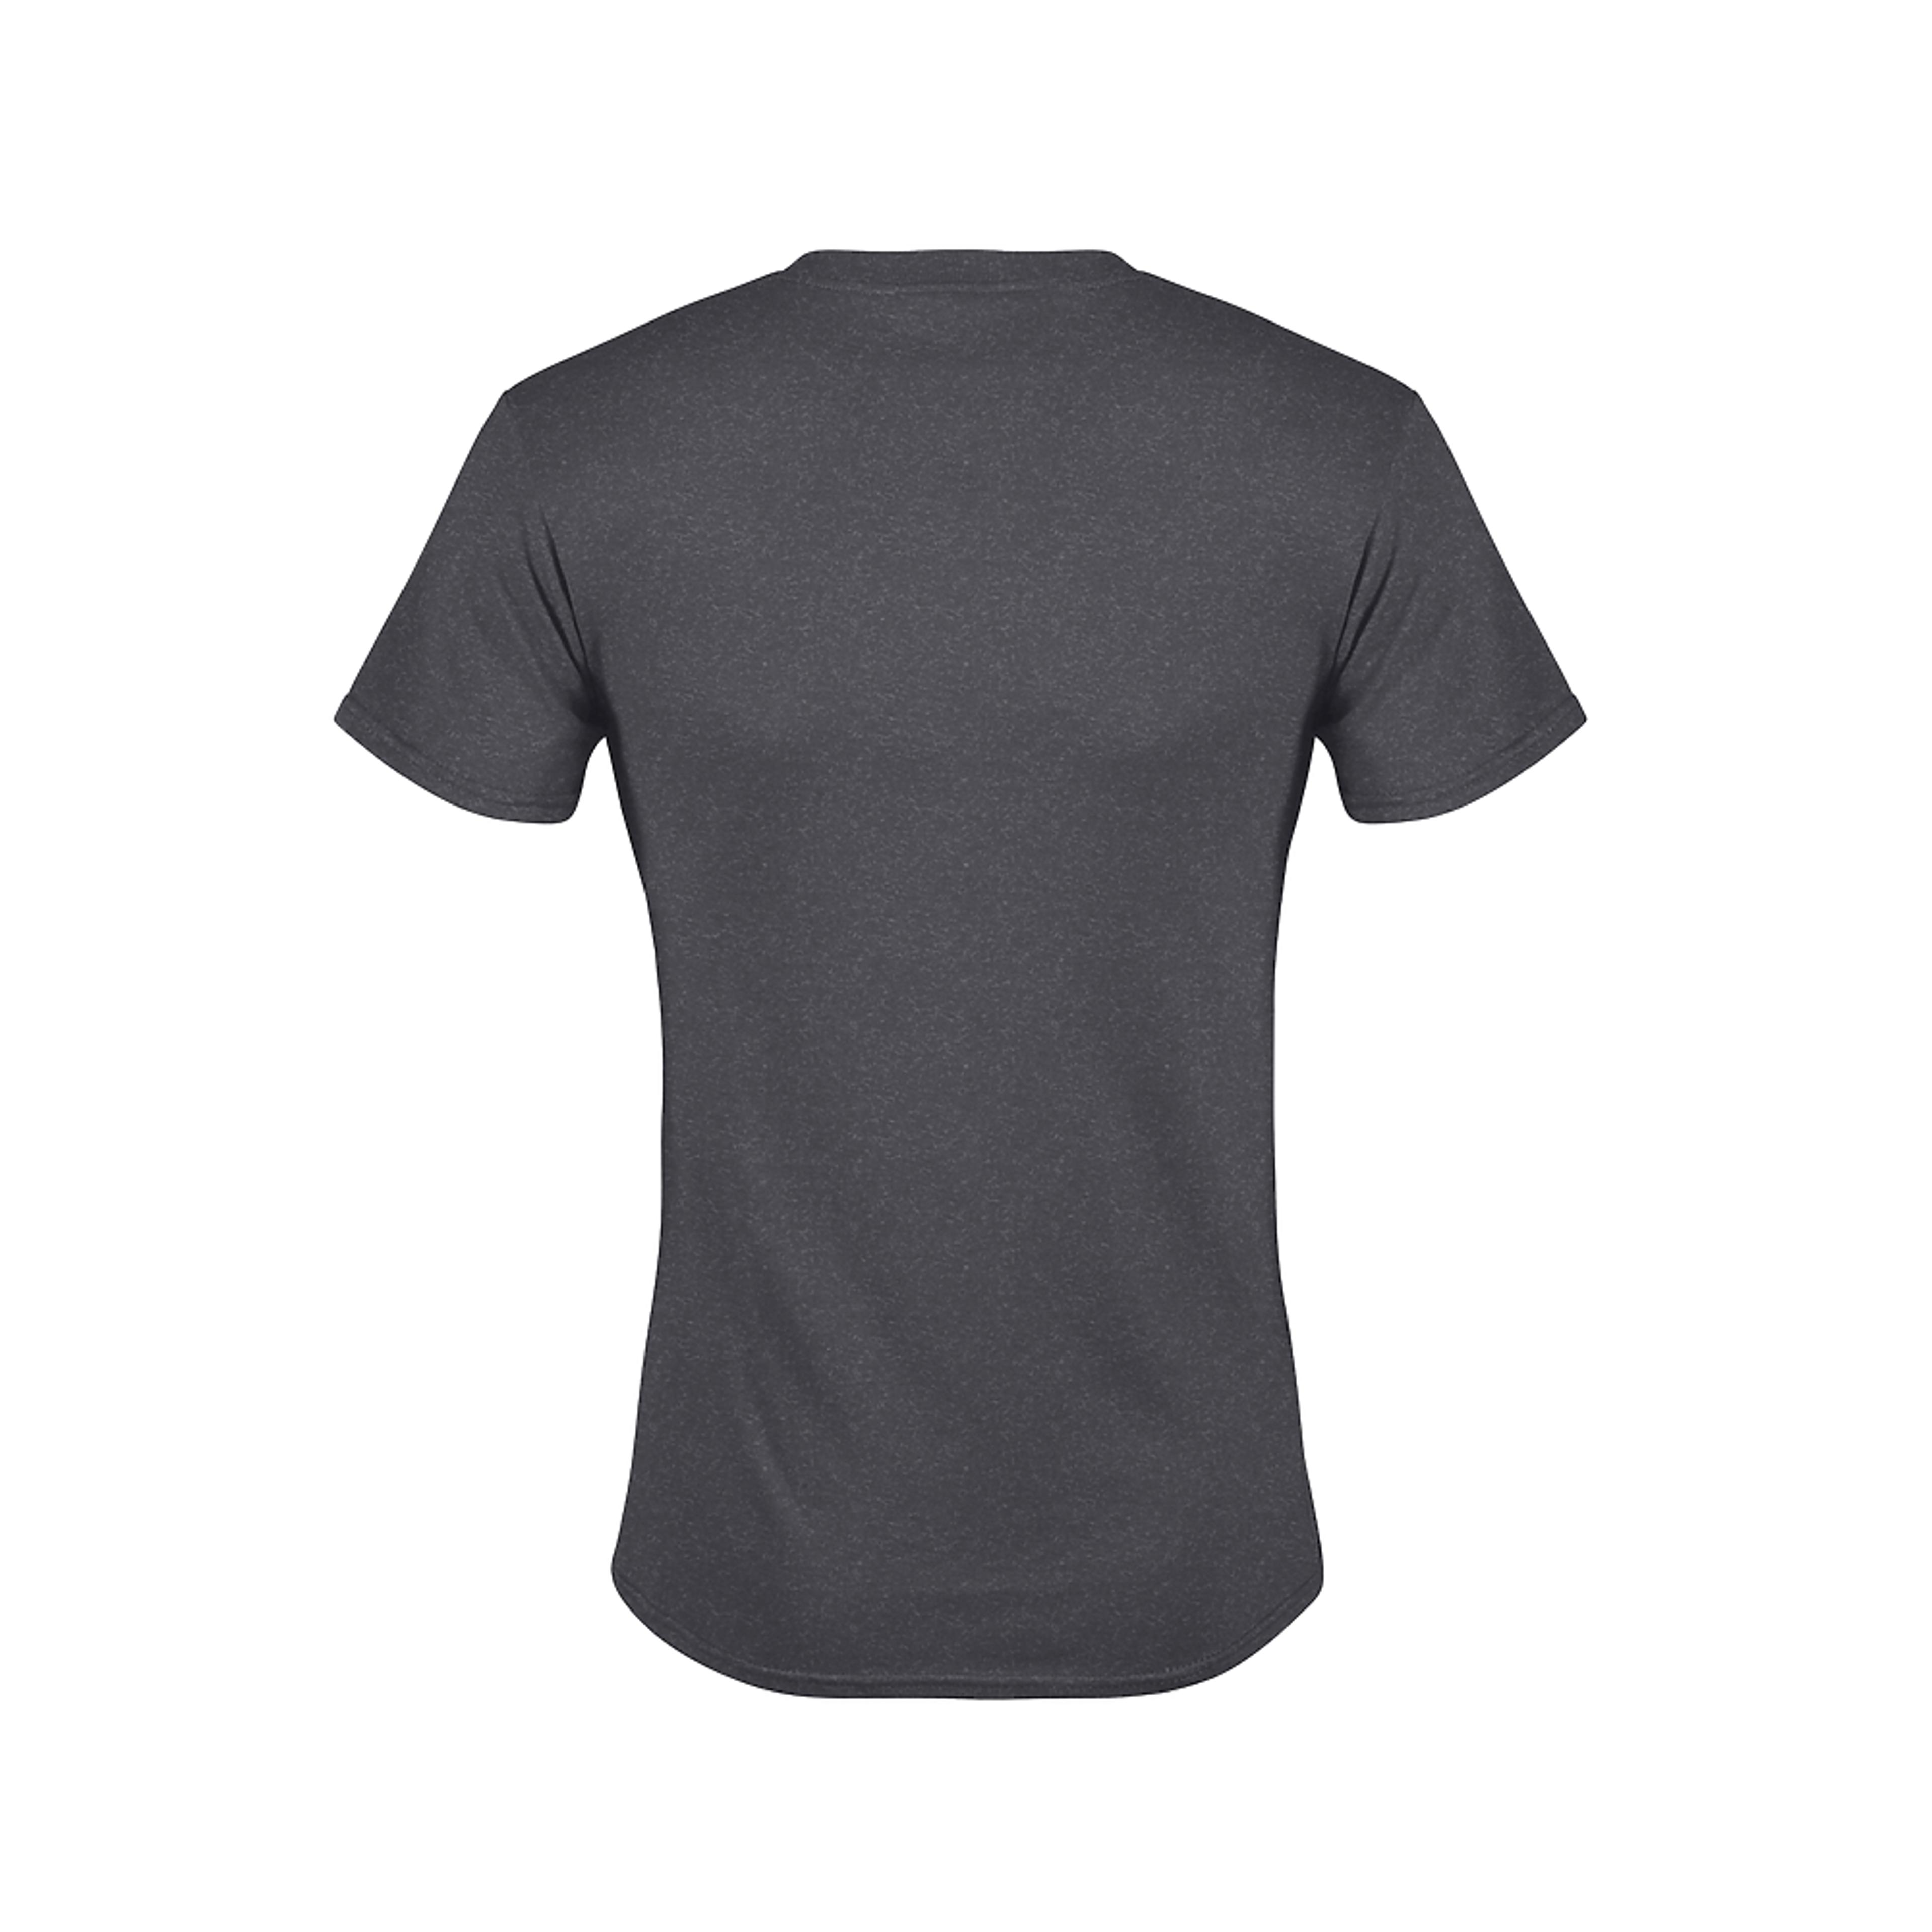 Alternate View 1 of Men's Aztlan Cross T-Shirt